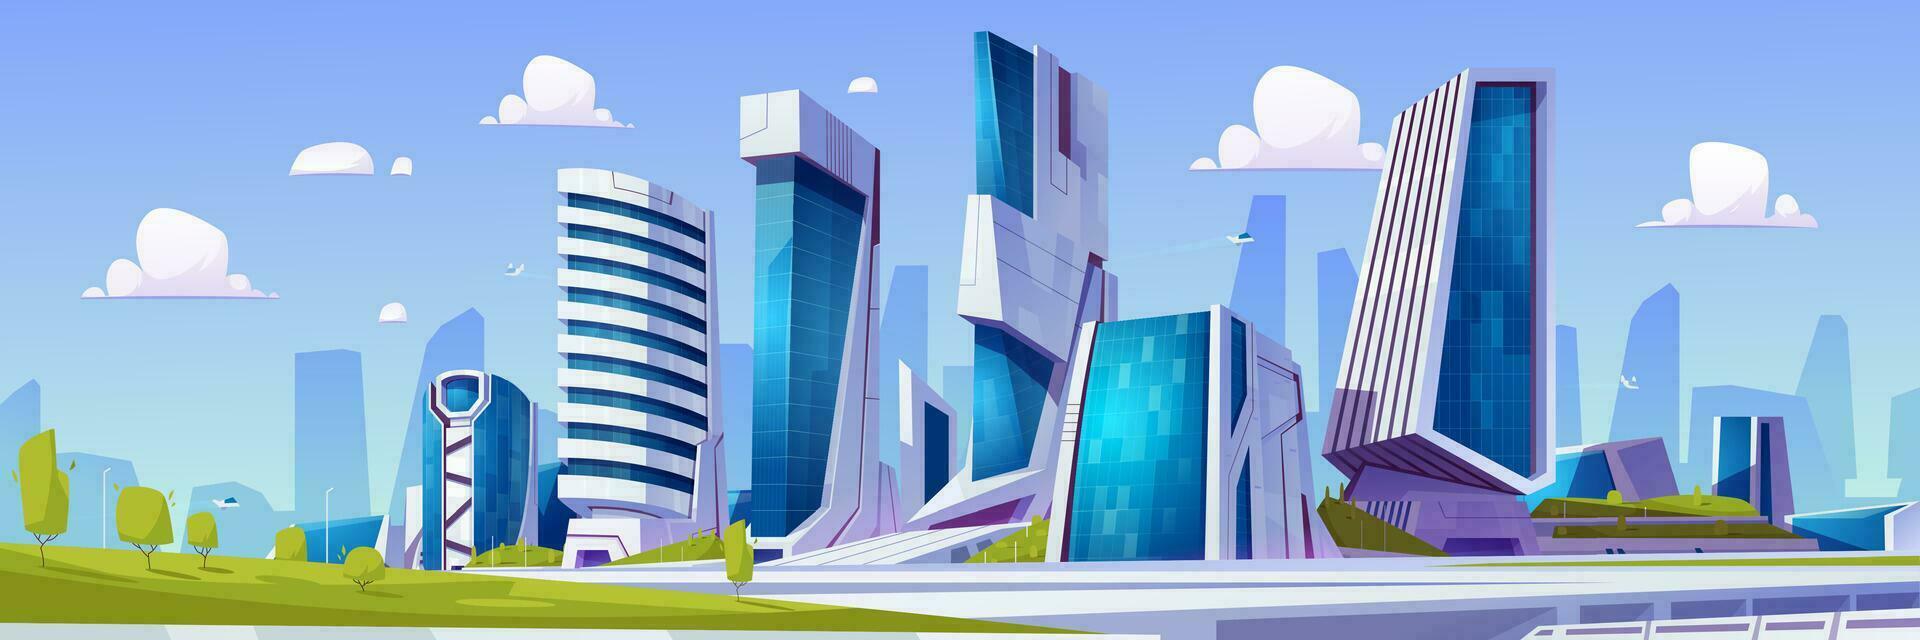 Cartoon futuristic city with green park vector